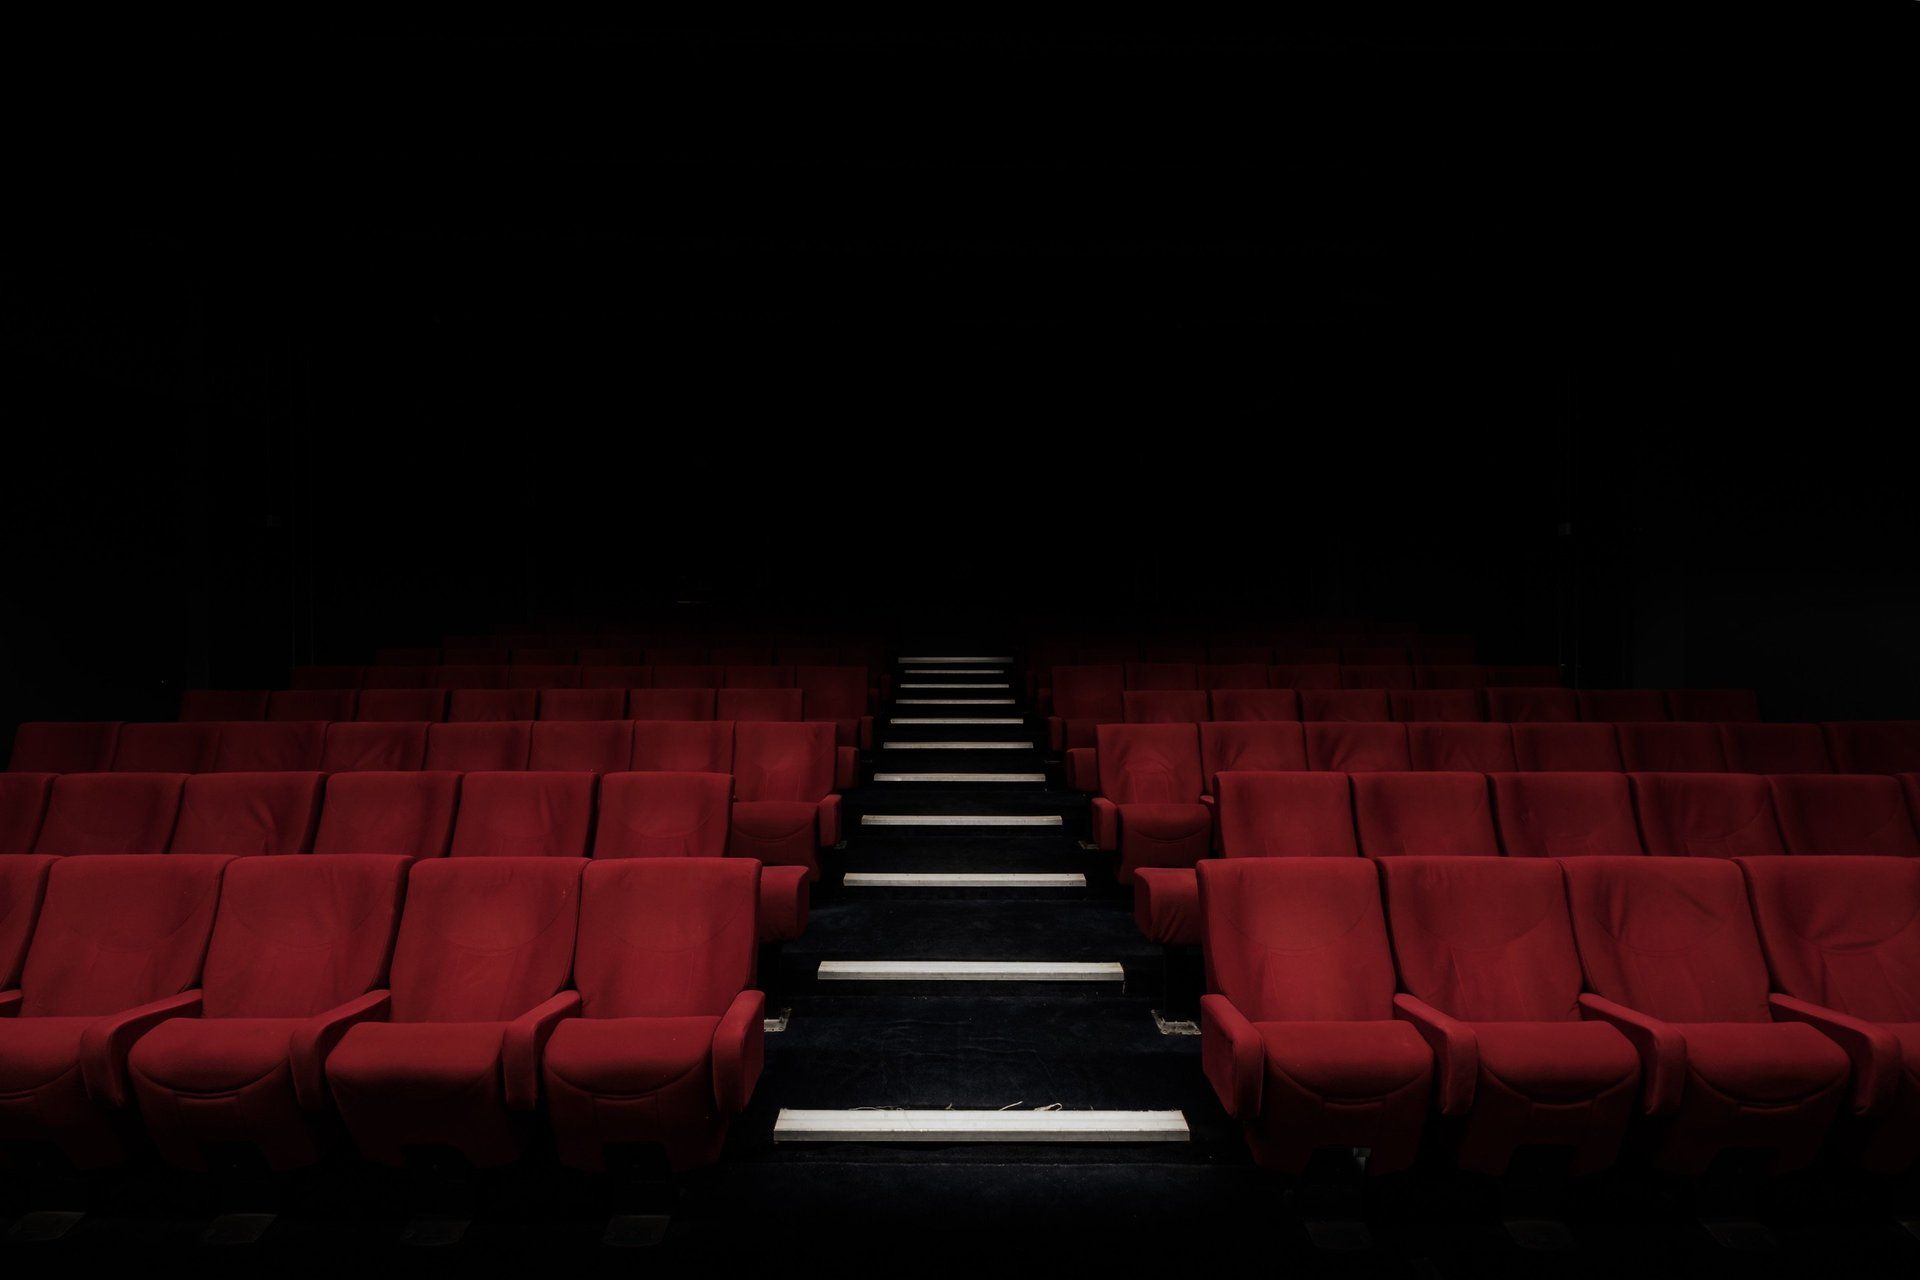 Photo of cinema seats